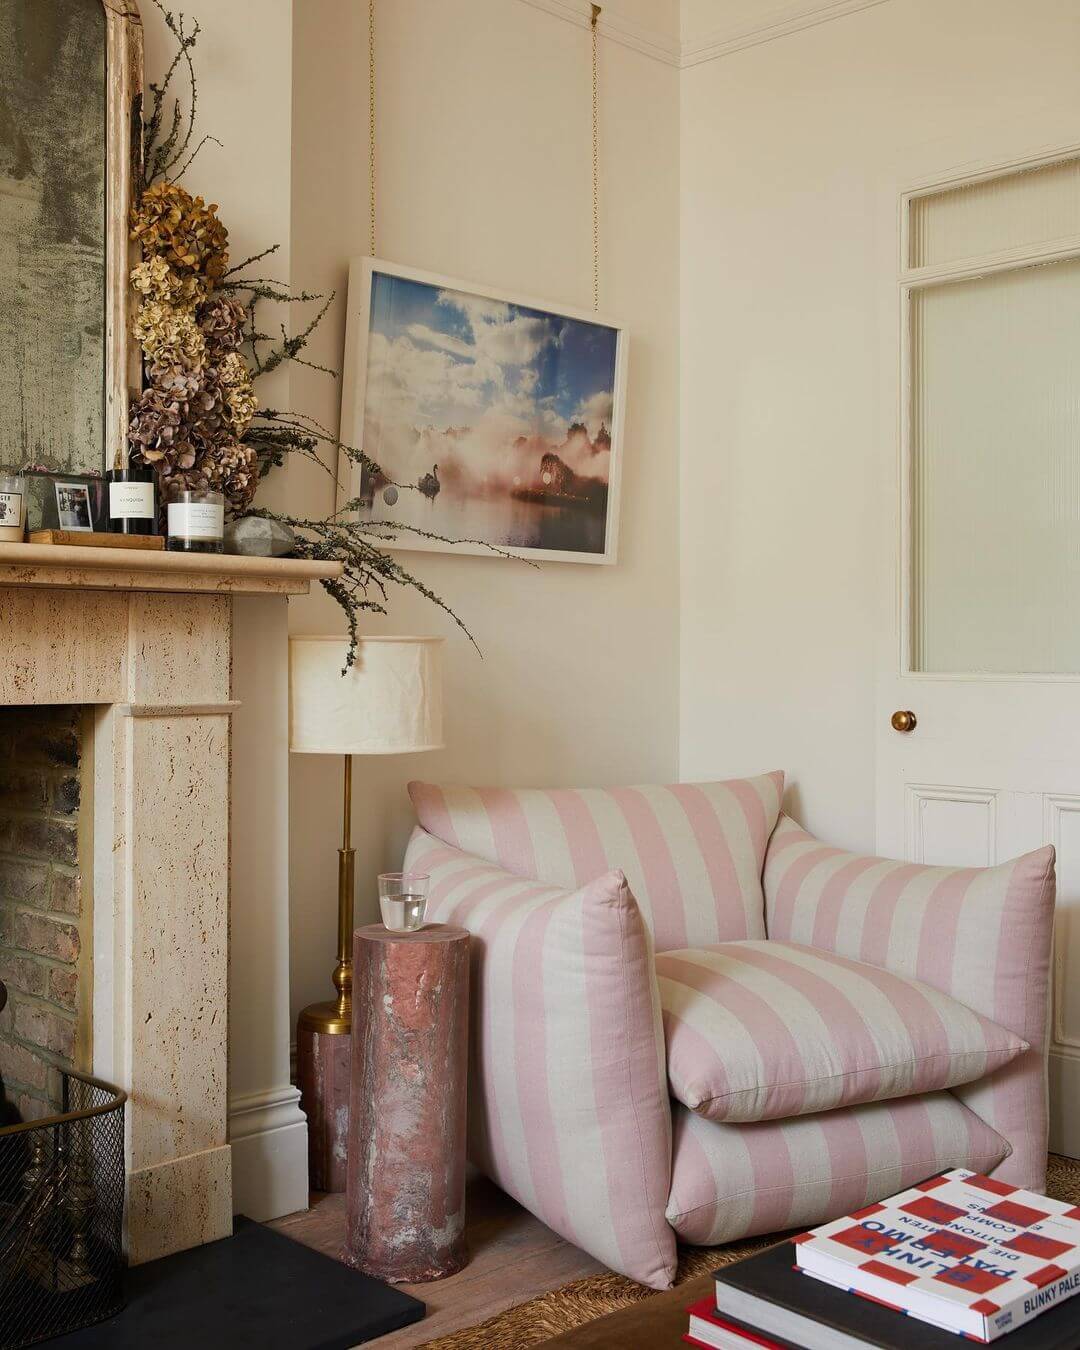 Buchanan Studio Studio Chair in pink stripes